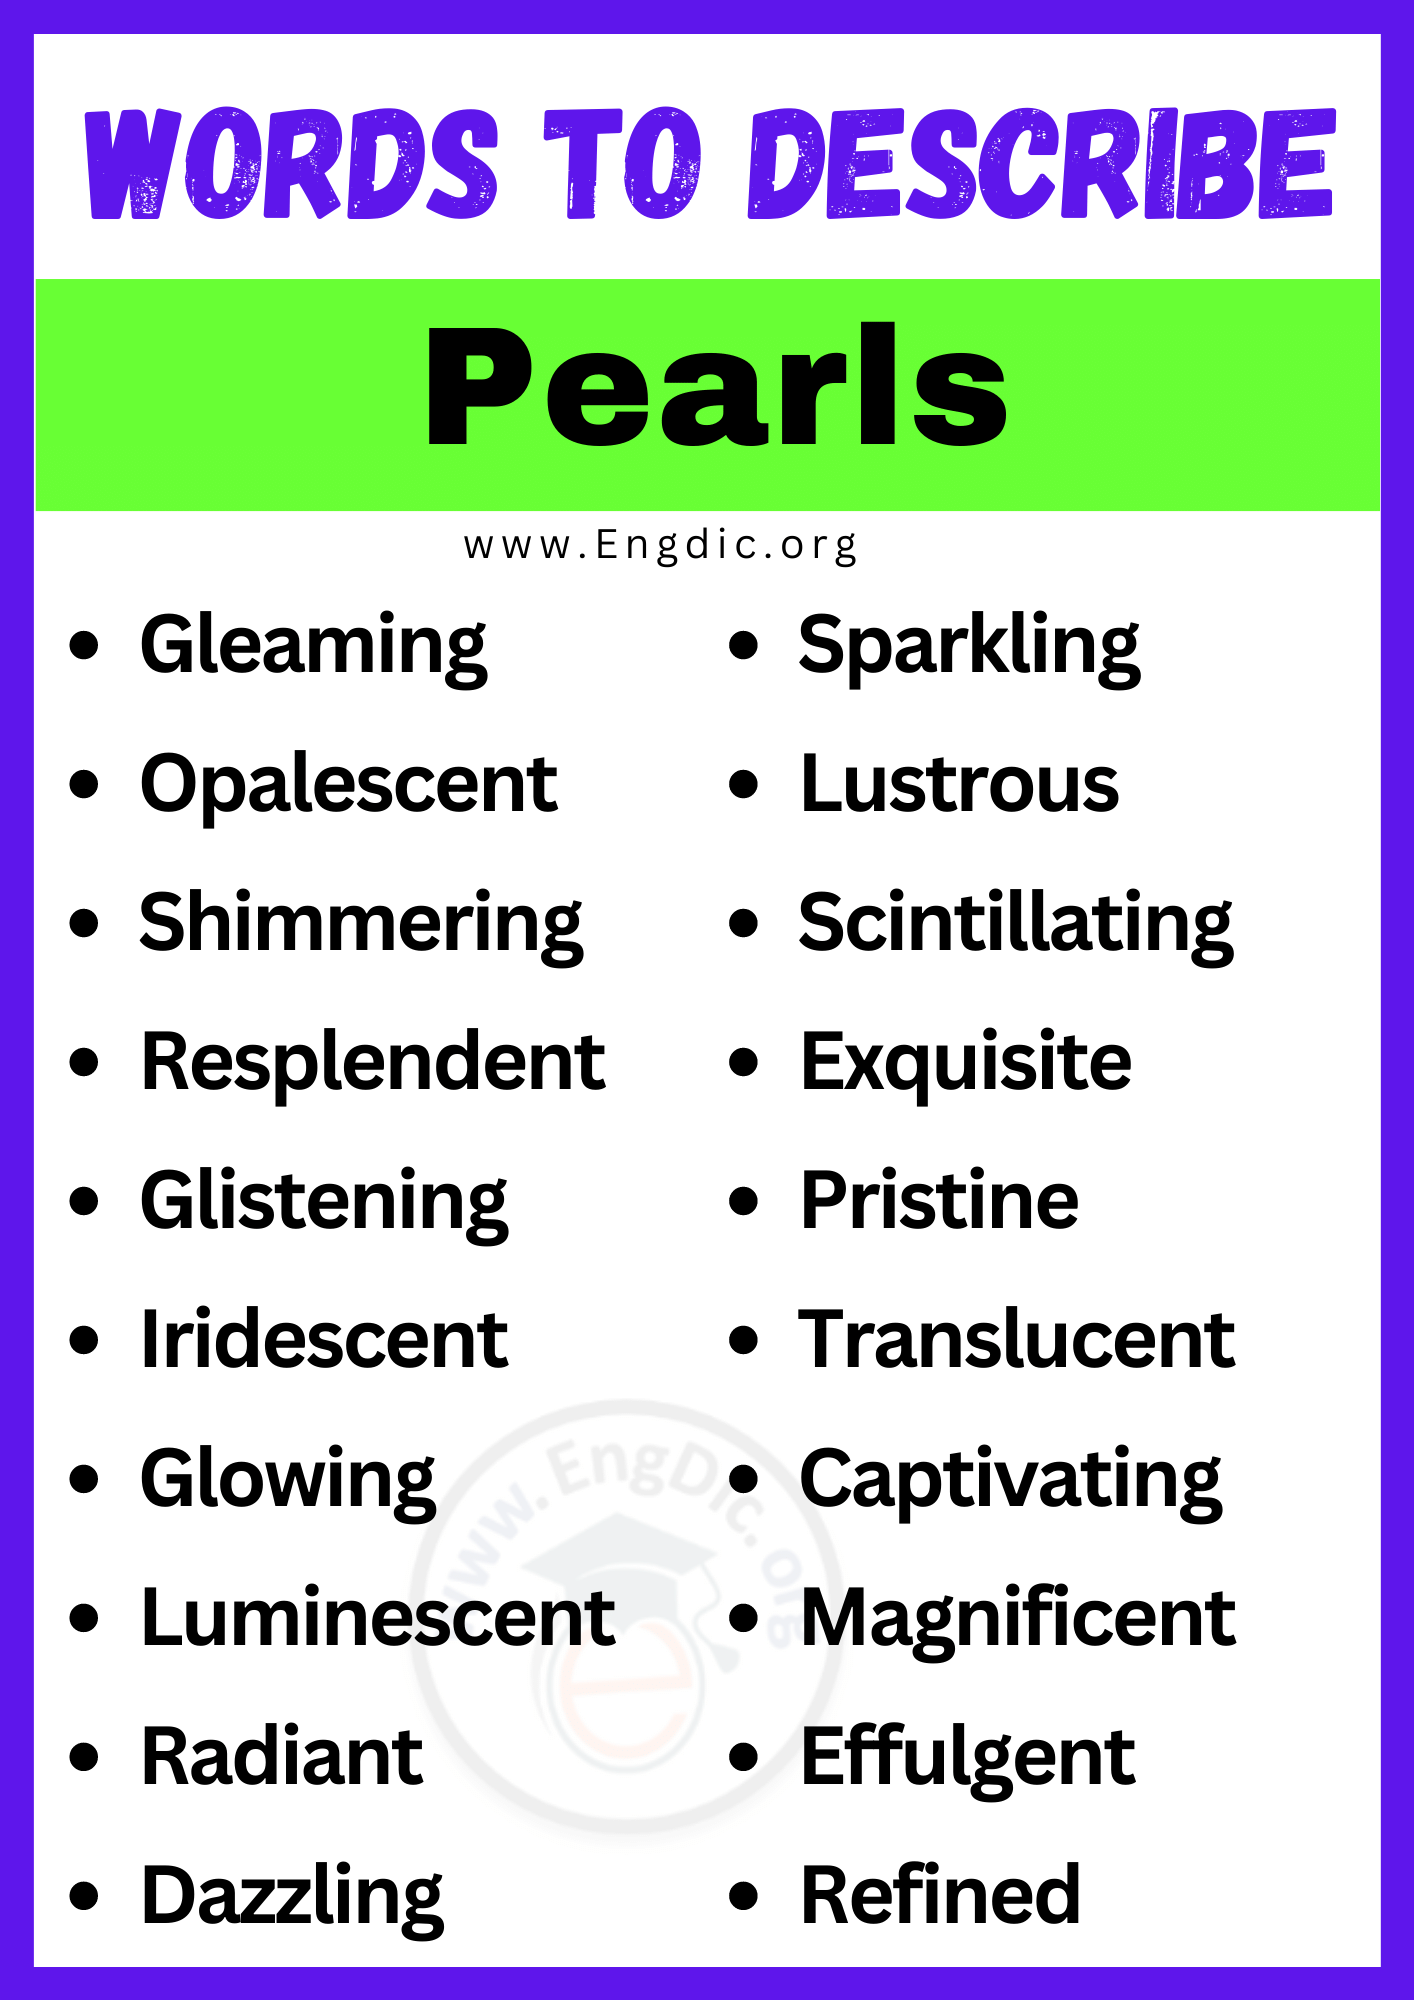 Words to Describe Pearls